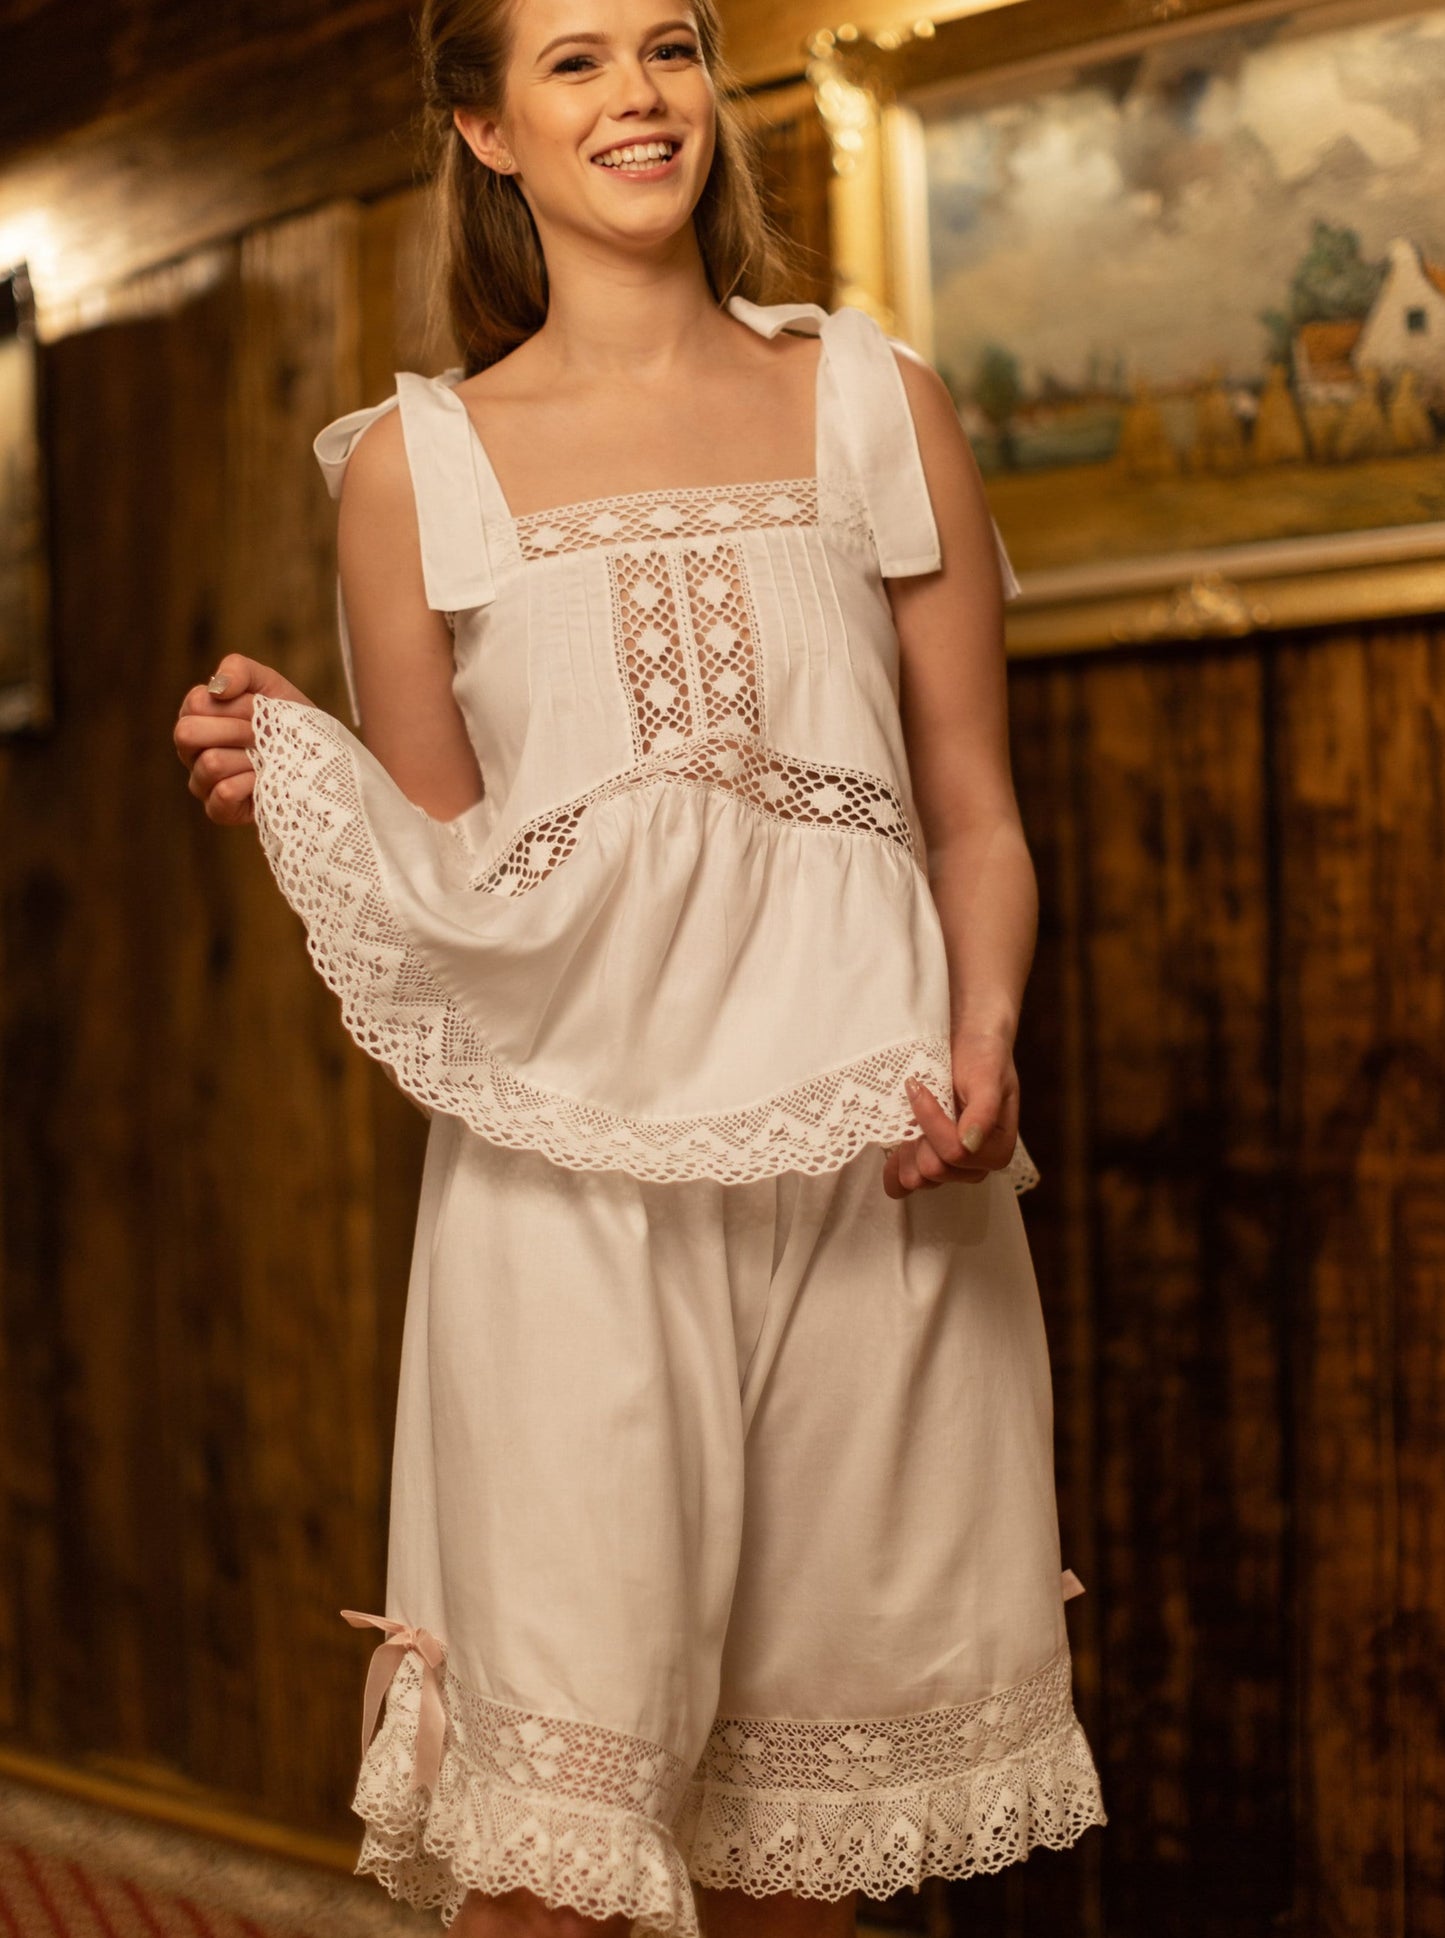 Mademoiselle de France - French Vintage Inspired Underwear Set in White Cotton